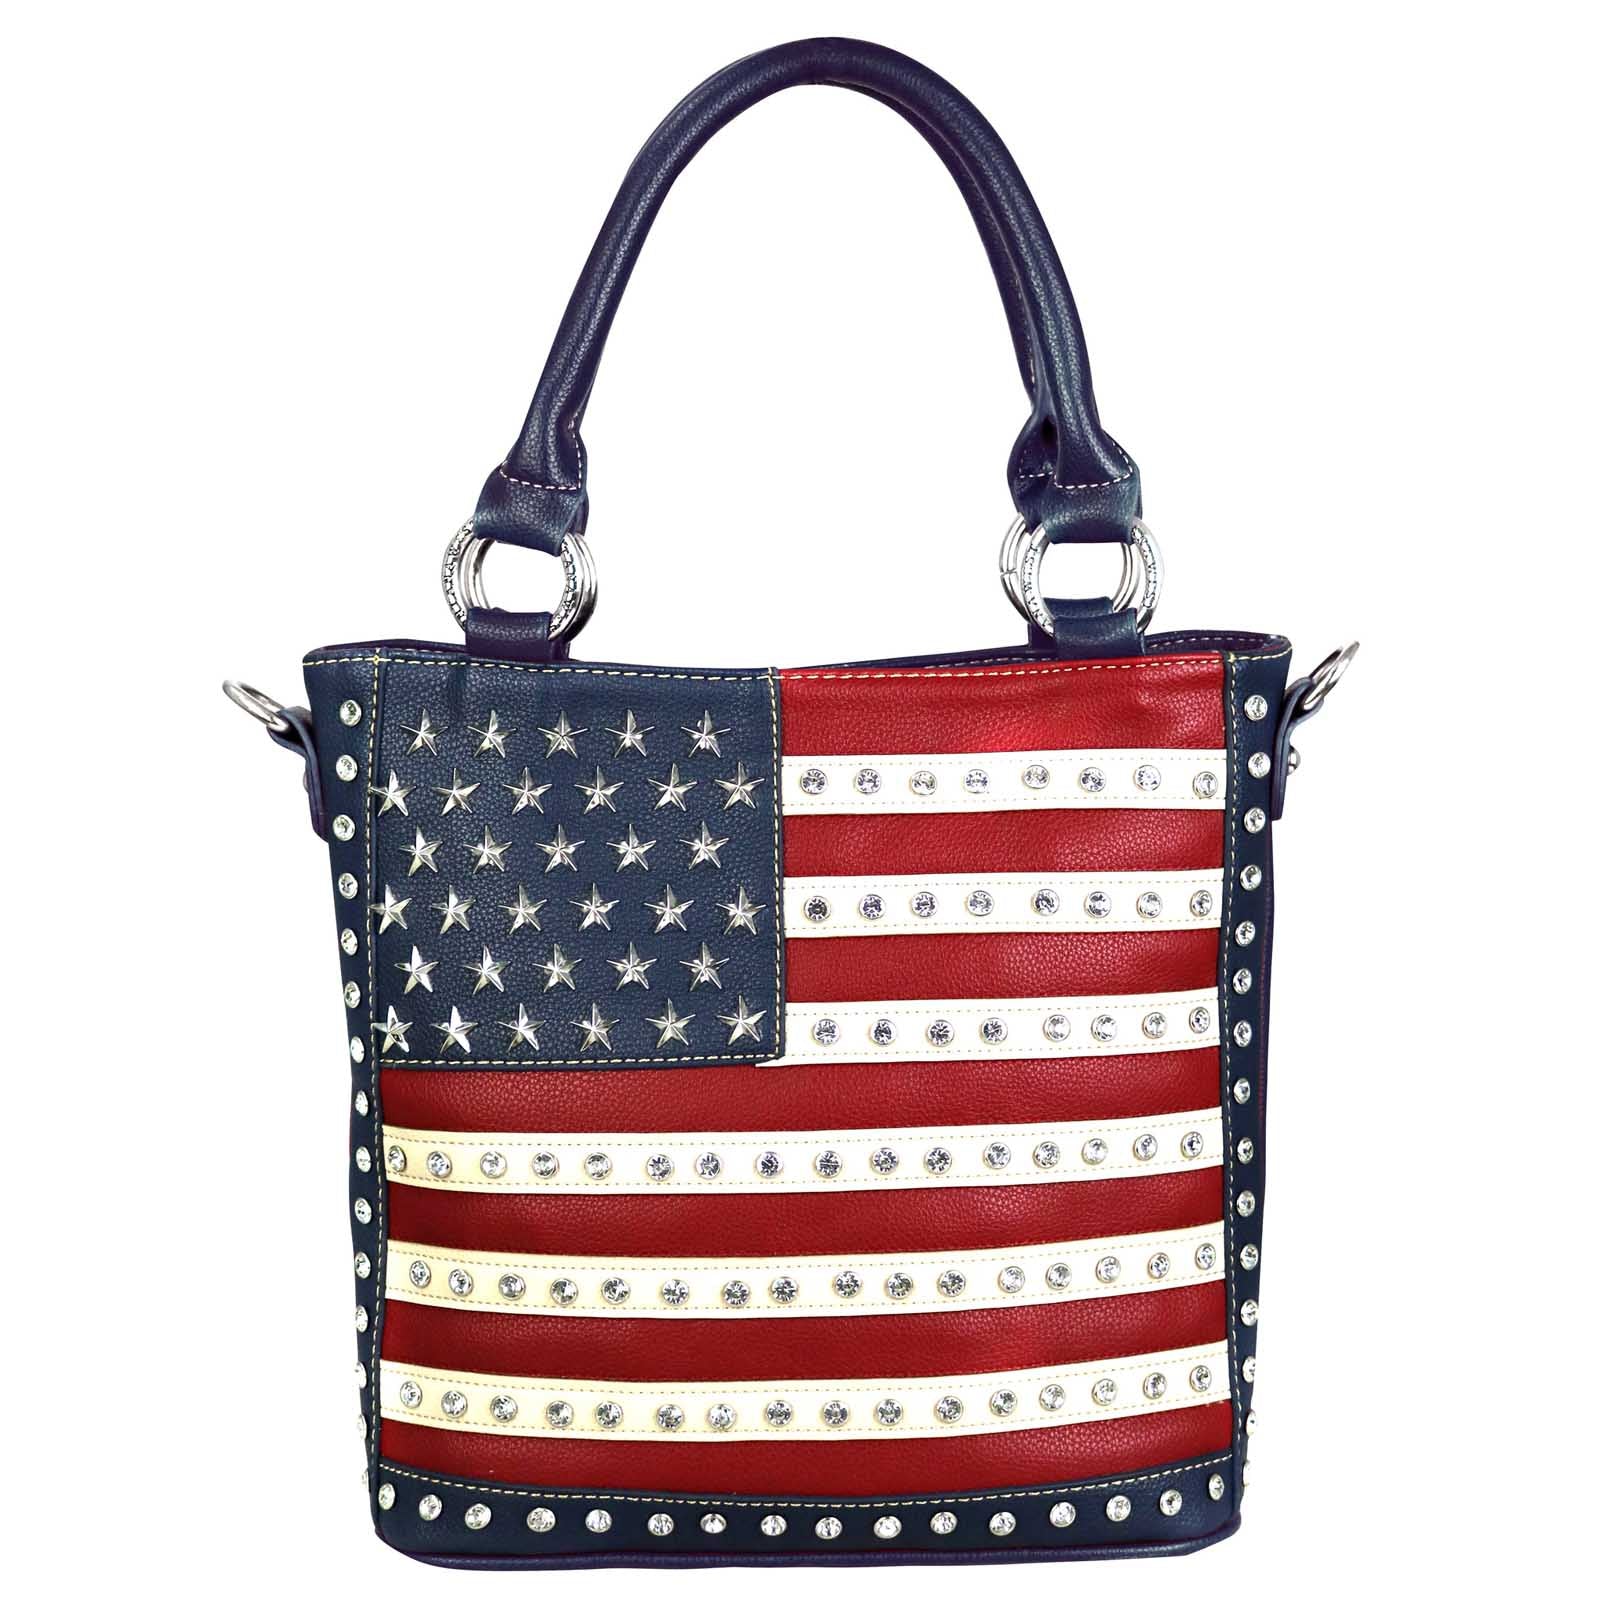 Montana West Concealed Carry Purse American Pride US Flag Handbag US04G-8461NY-6